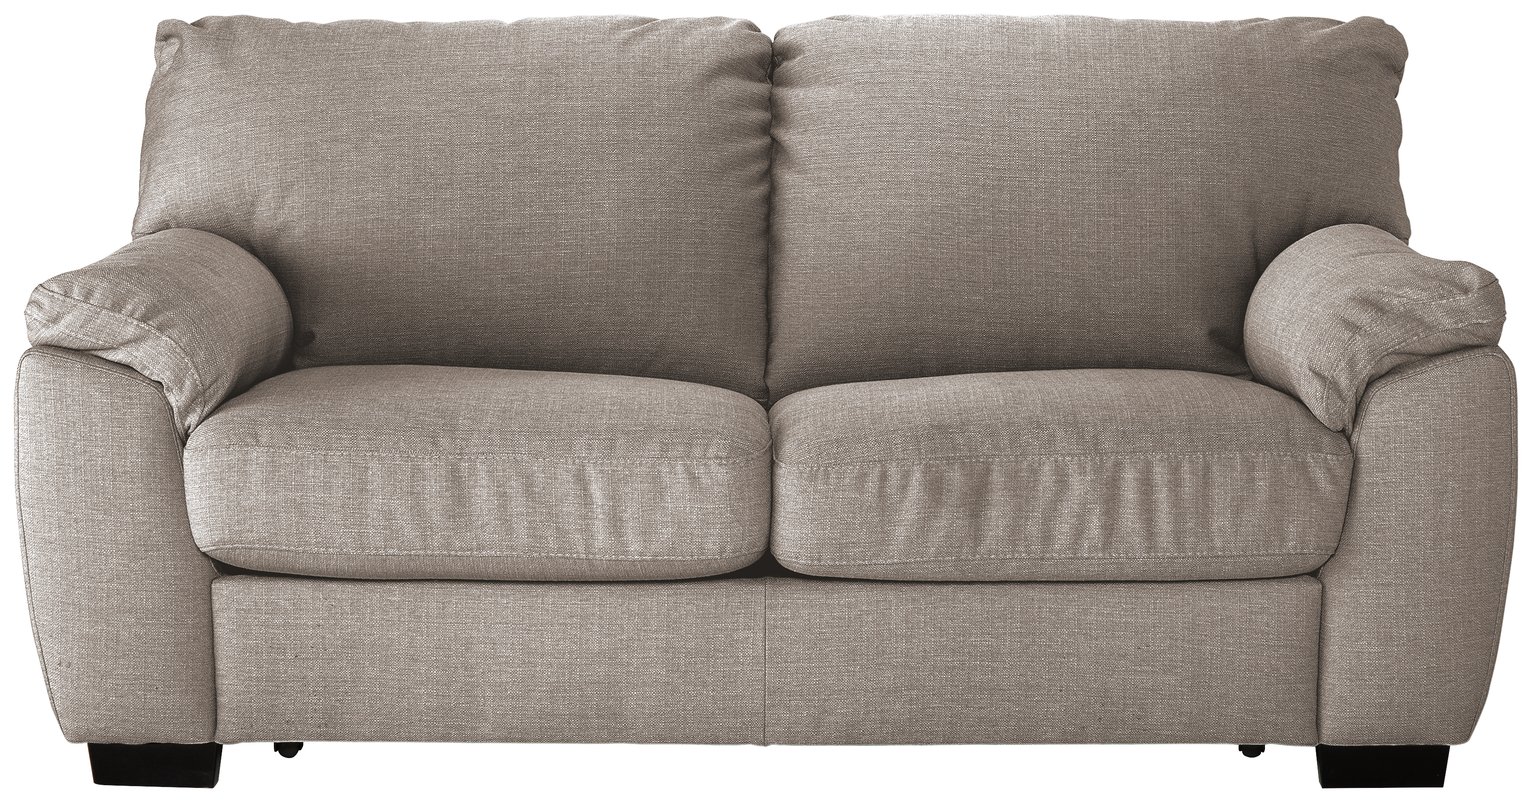 Argos Home Milano Fabric Sofa Bed - Natural